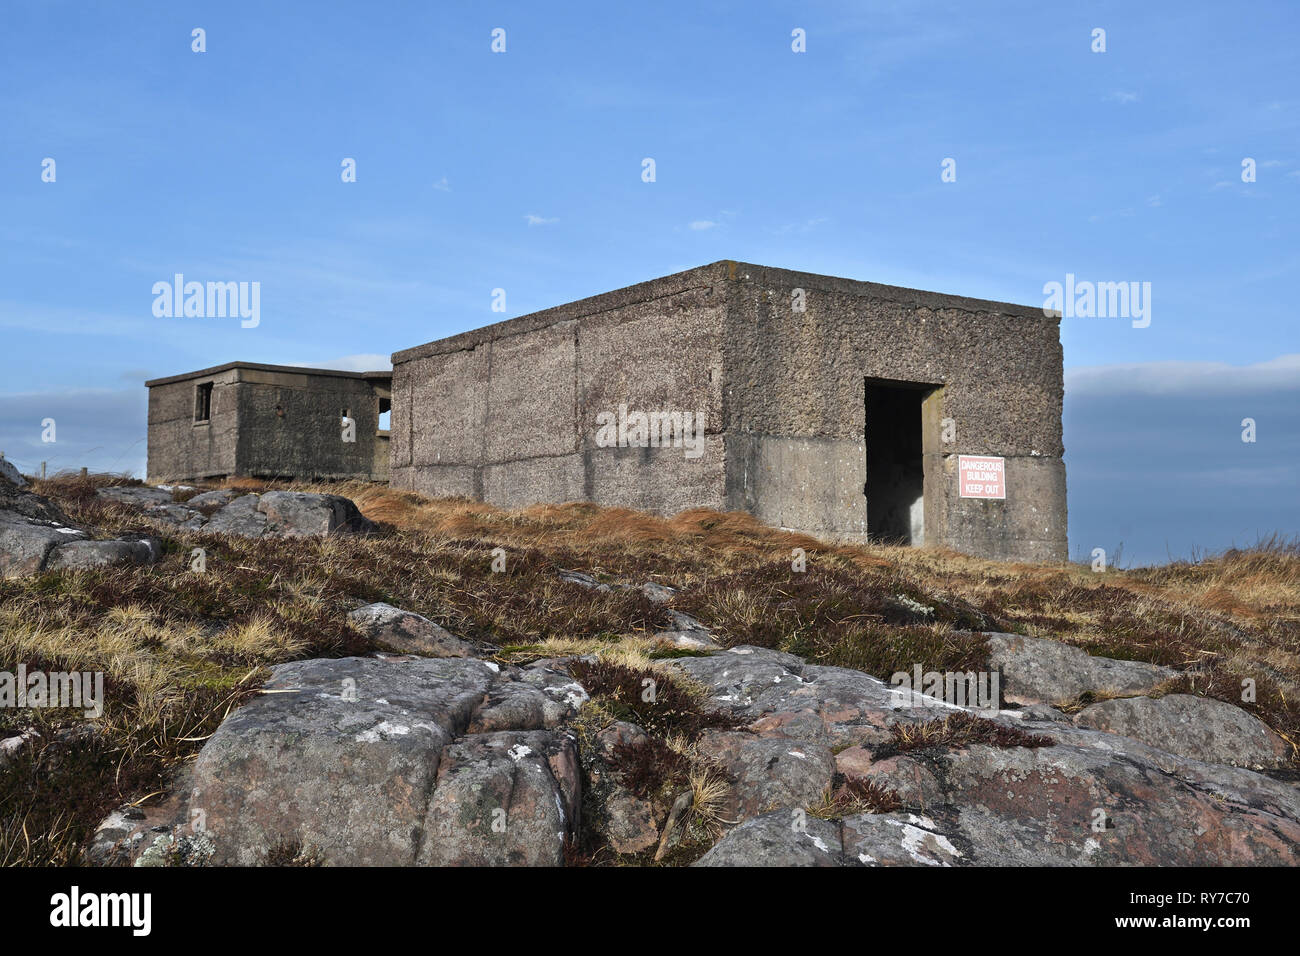 Küstenschutz Batterie;russischen Arktis Konvois; rubha nan Oll; Bucht;  Wester Ross; Schottland Stockfotografie - Alamy